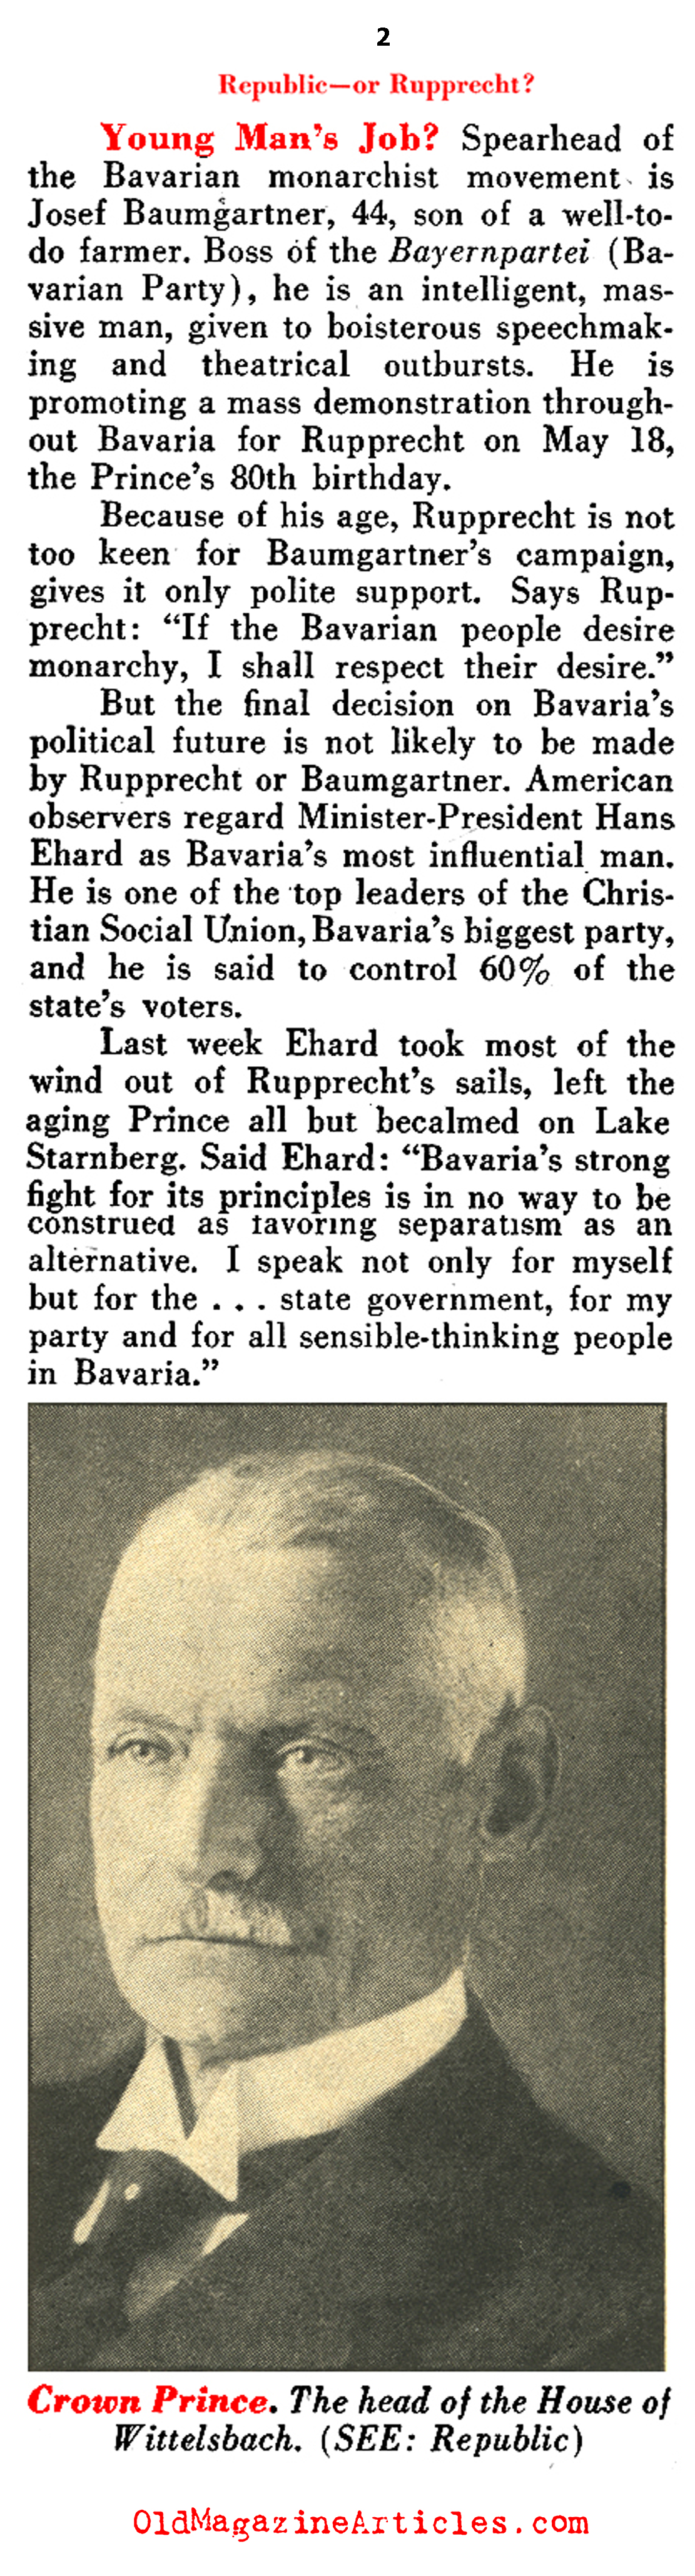 The Bavarians Wanted a King (Pathfinder Magazine, 1949)